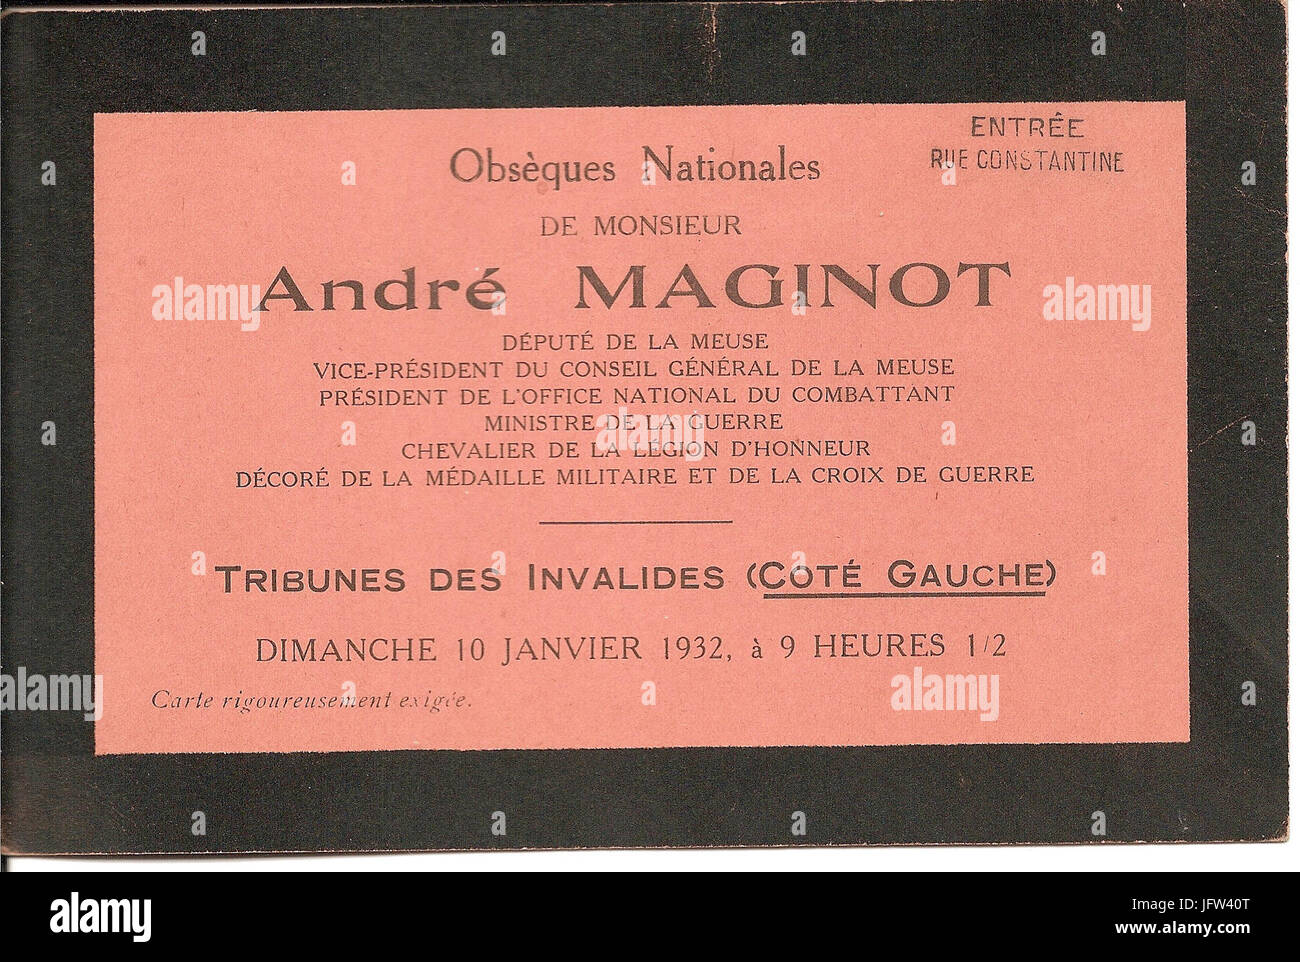 André MAGINOT Stock Photo